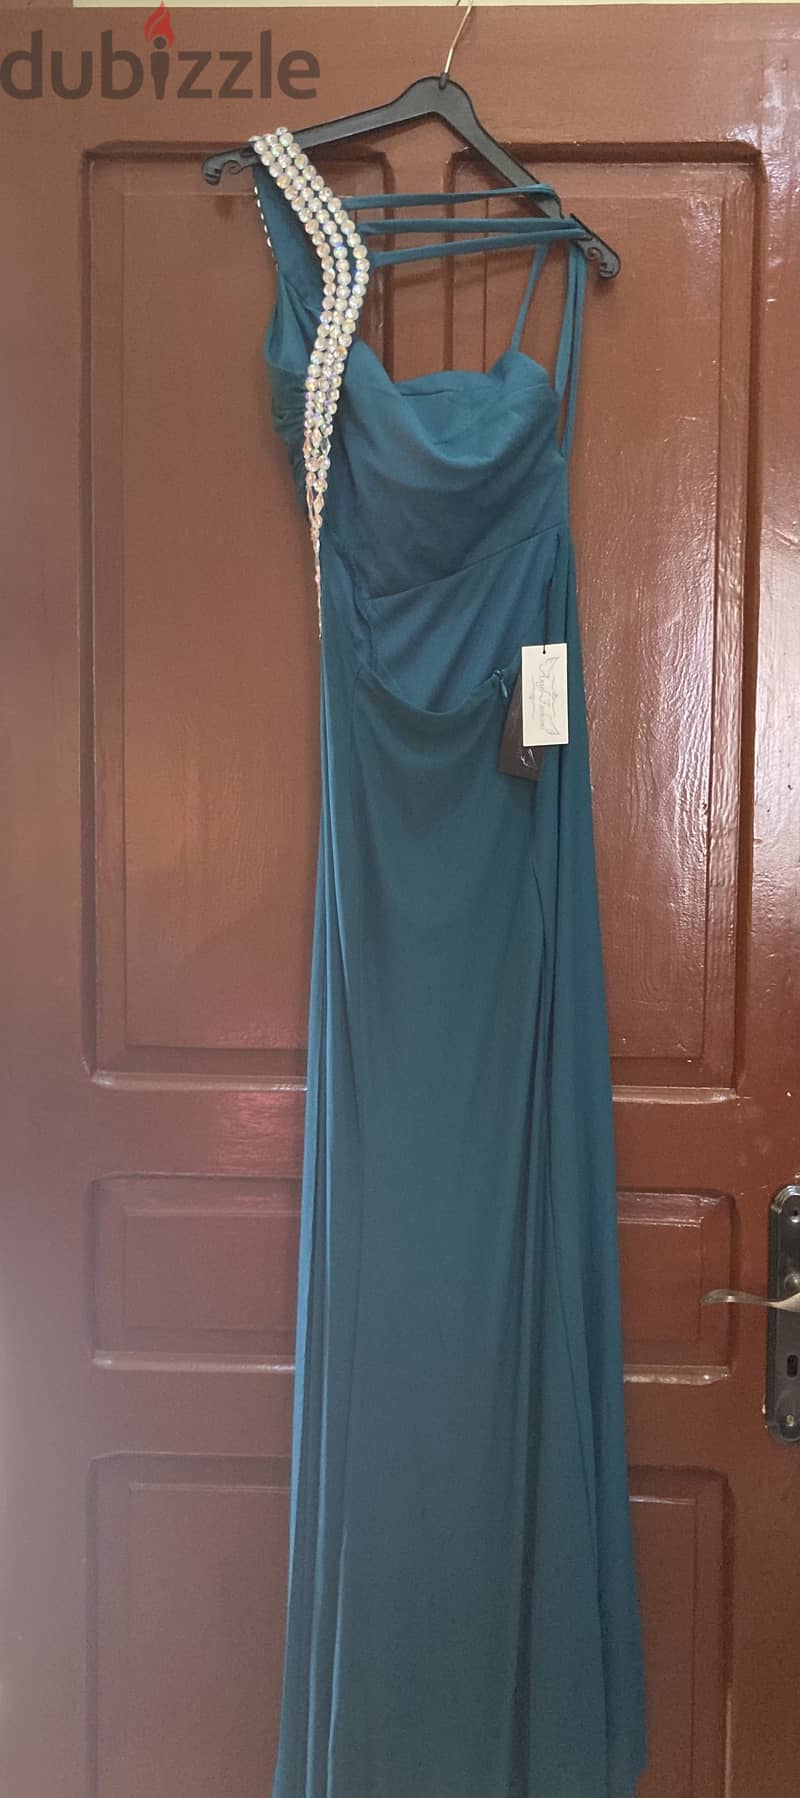 Bundle of 3 dresses for sale!! 1